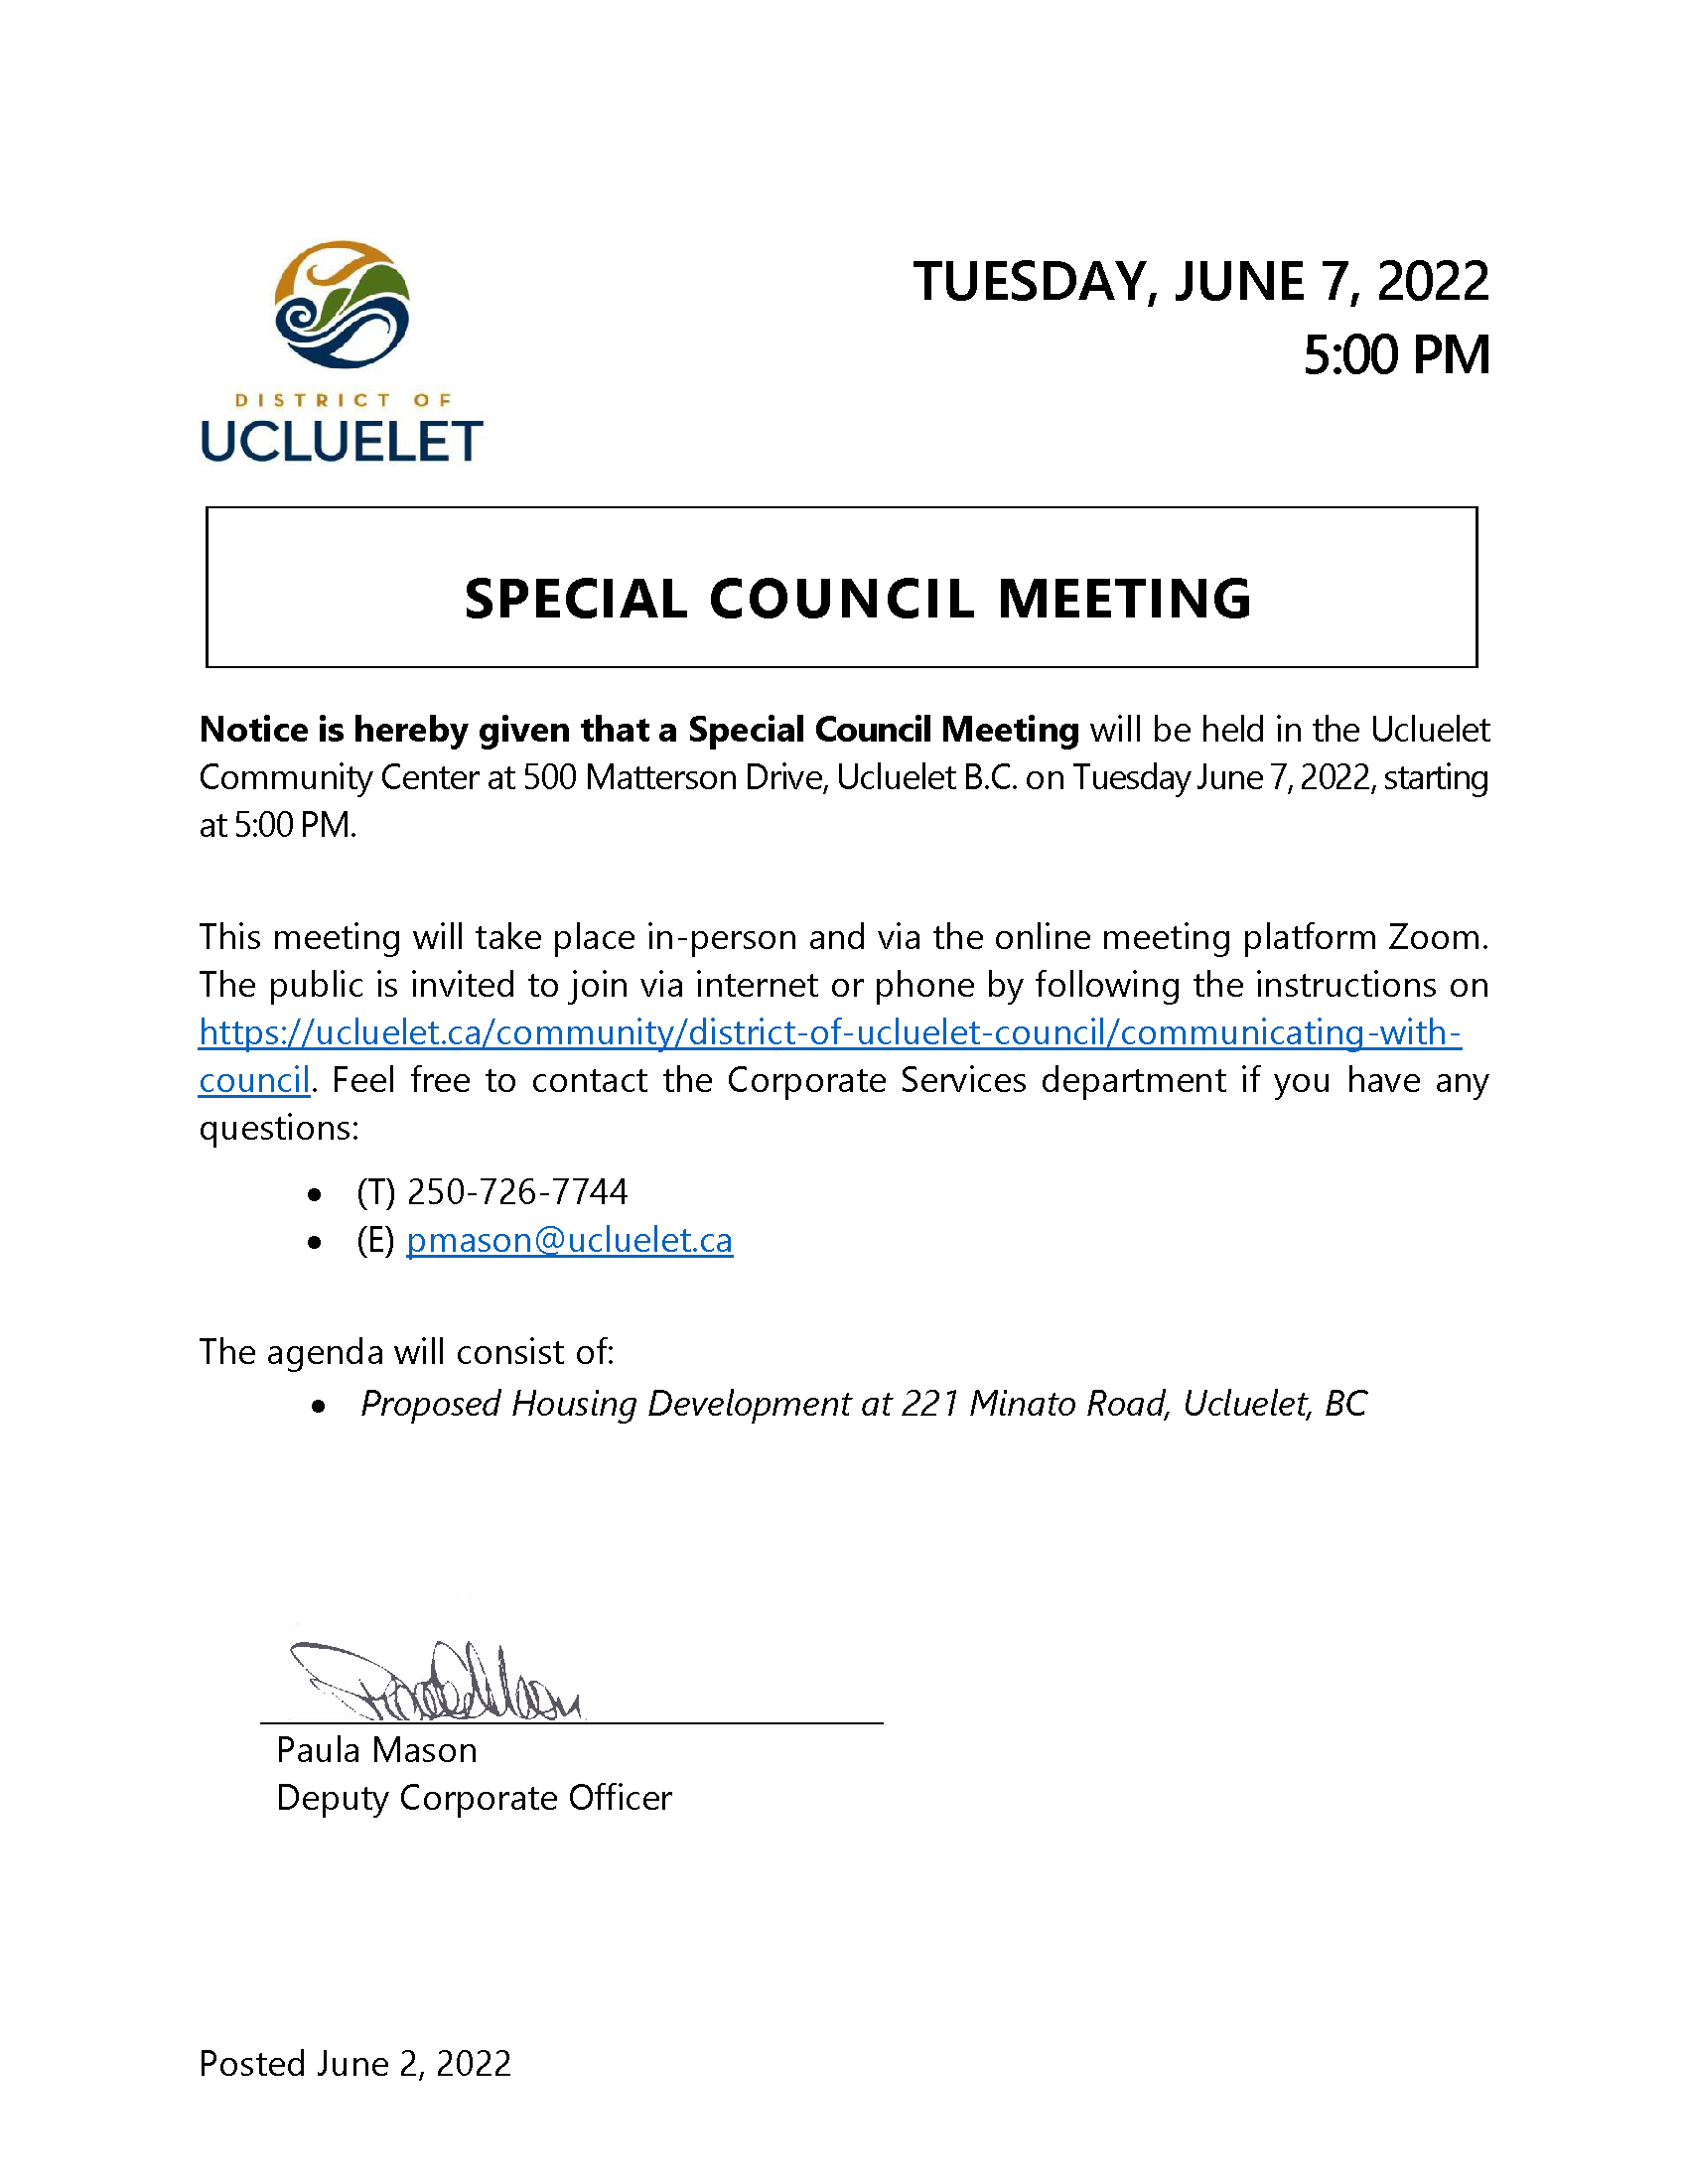 2022 06 07 Special Meeting Notice